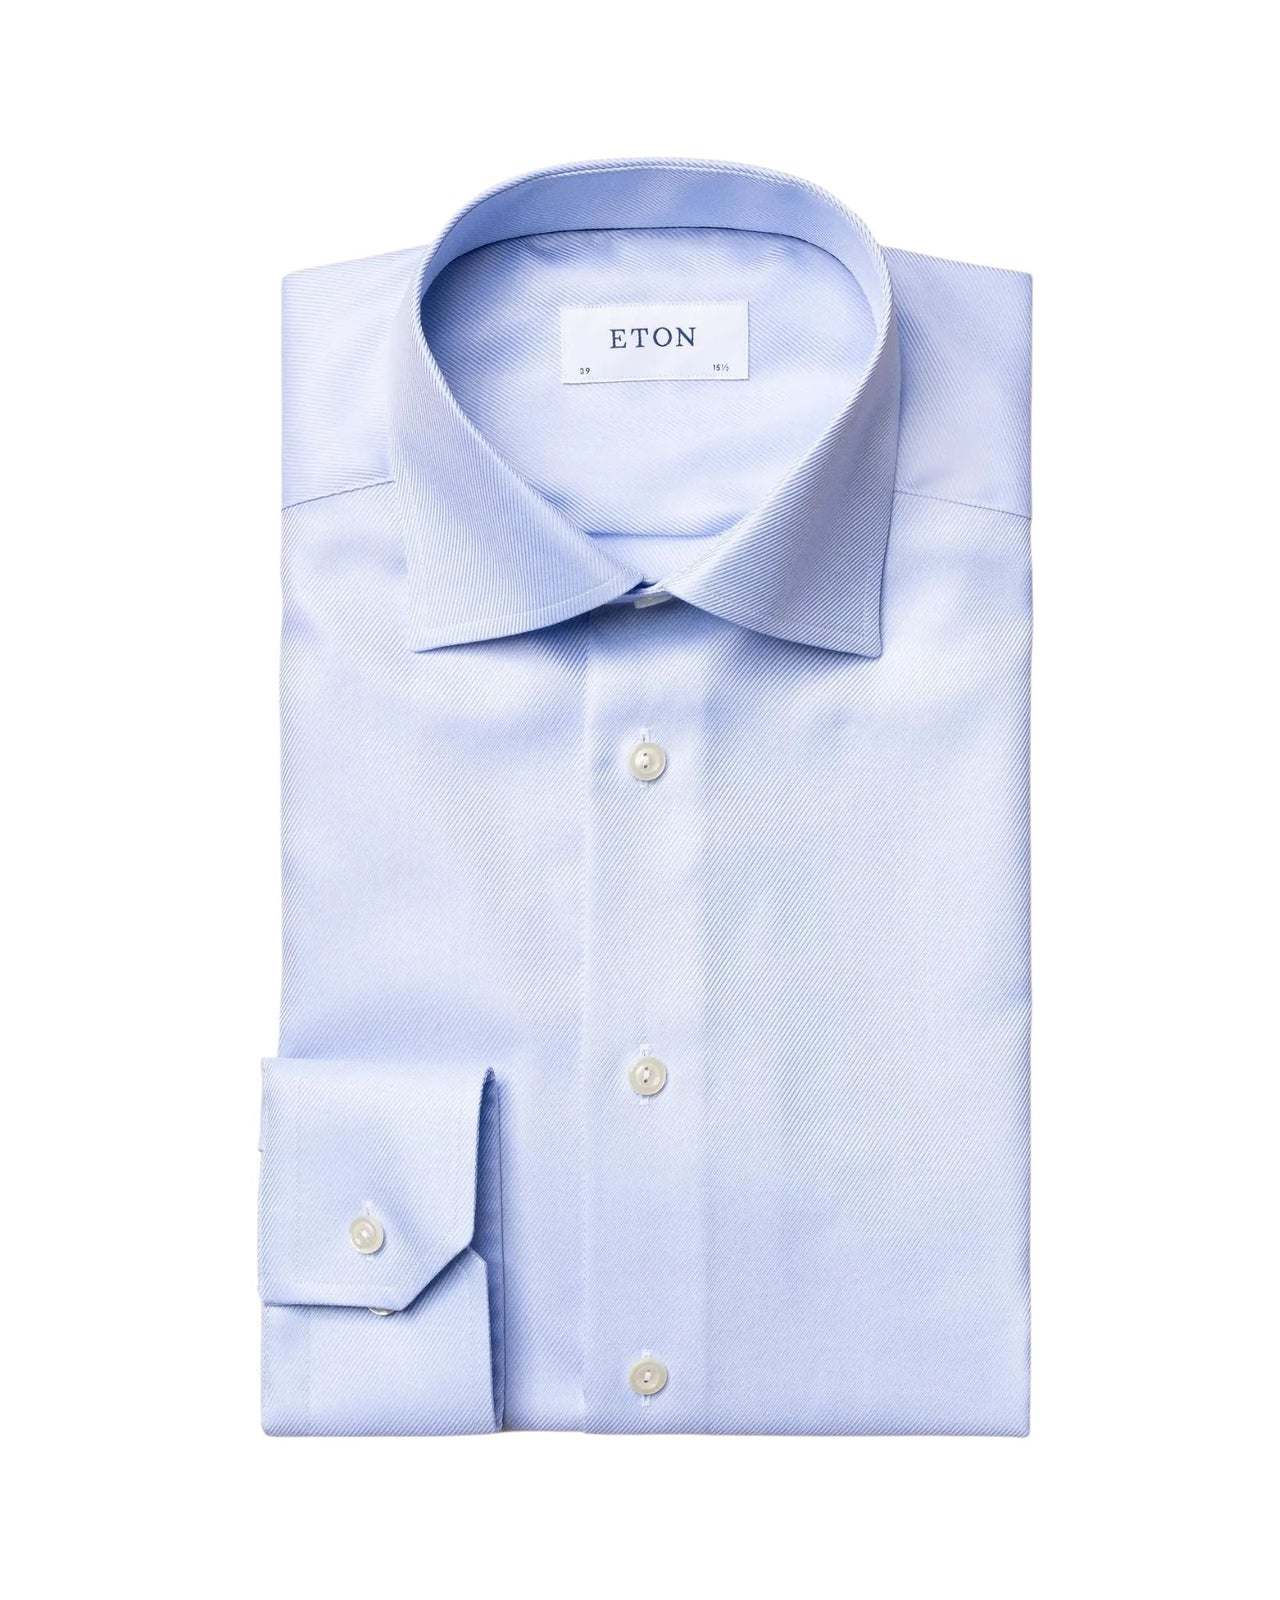 ETON Textured Twill Shirt LIGHT BLUE